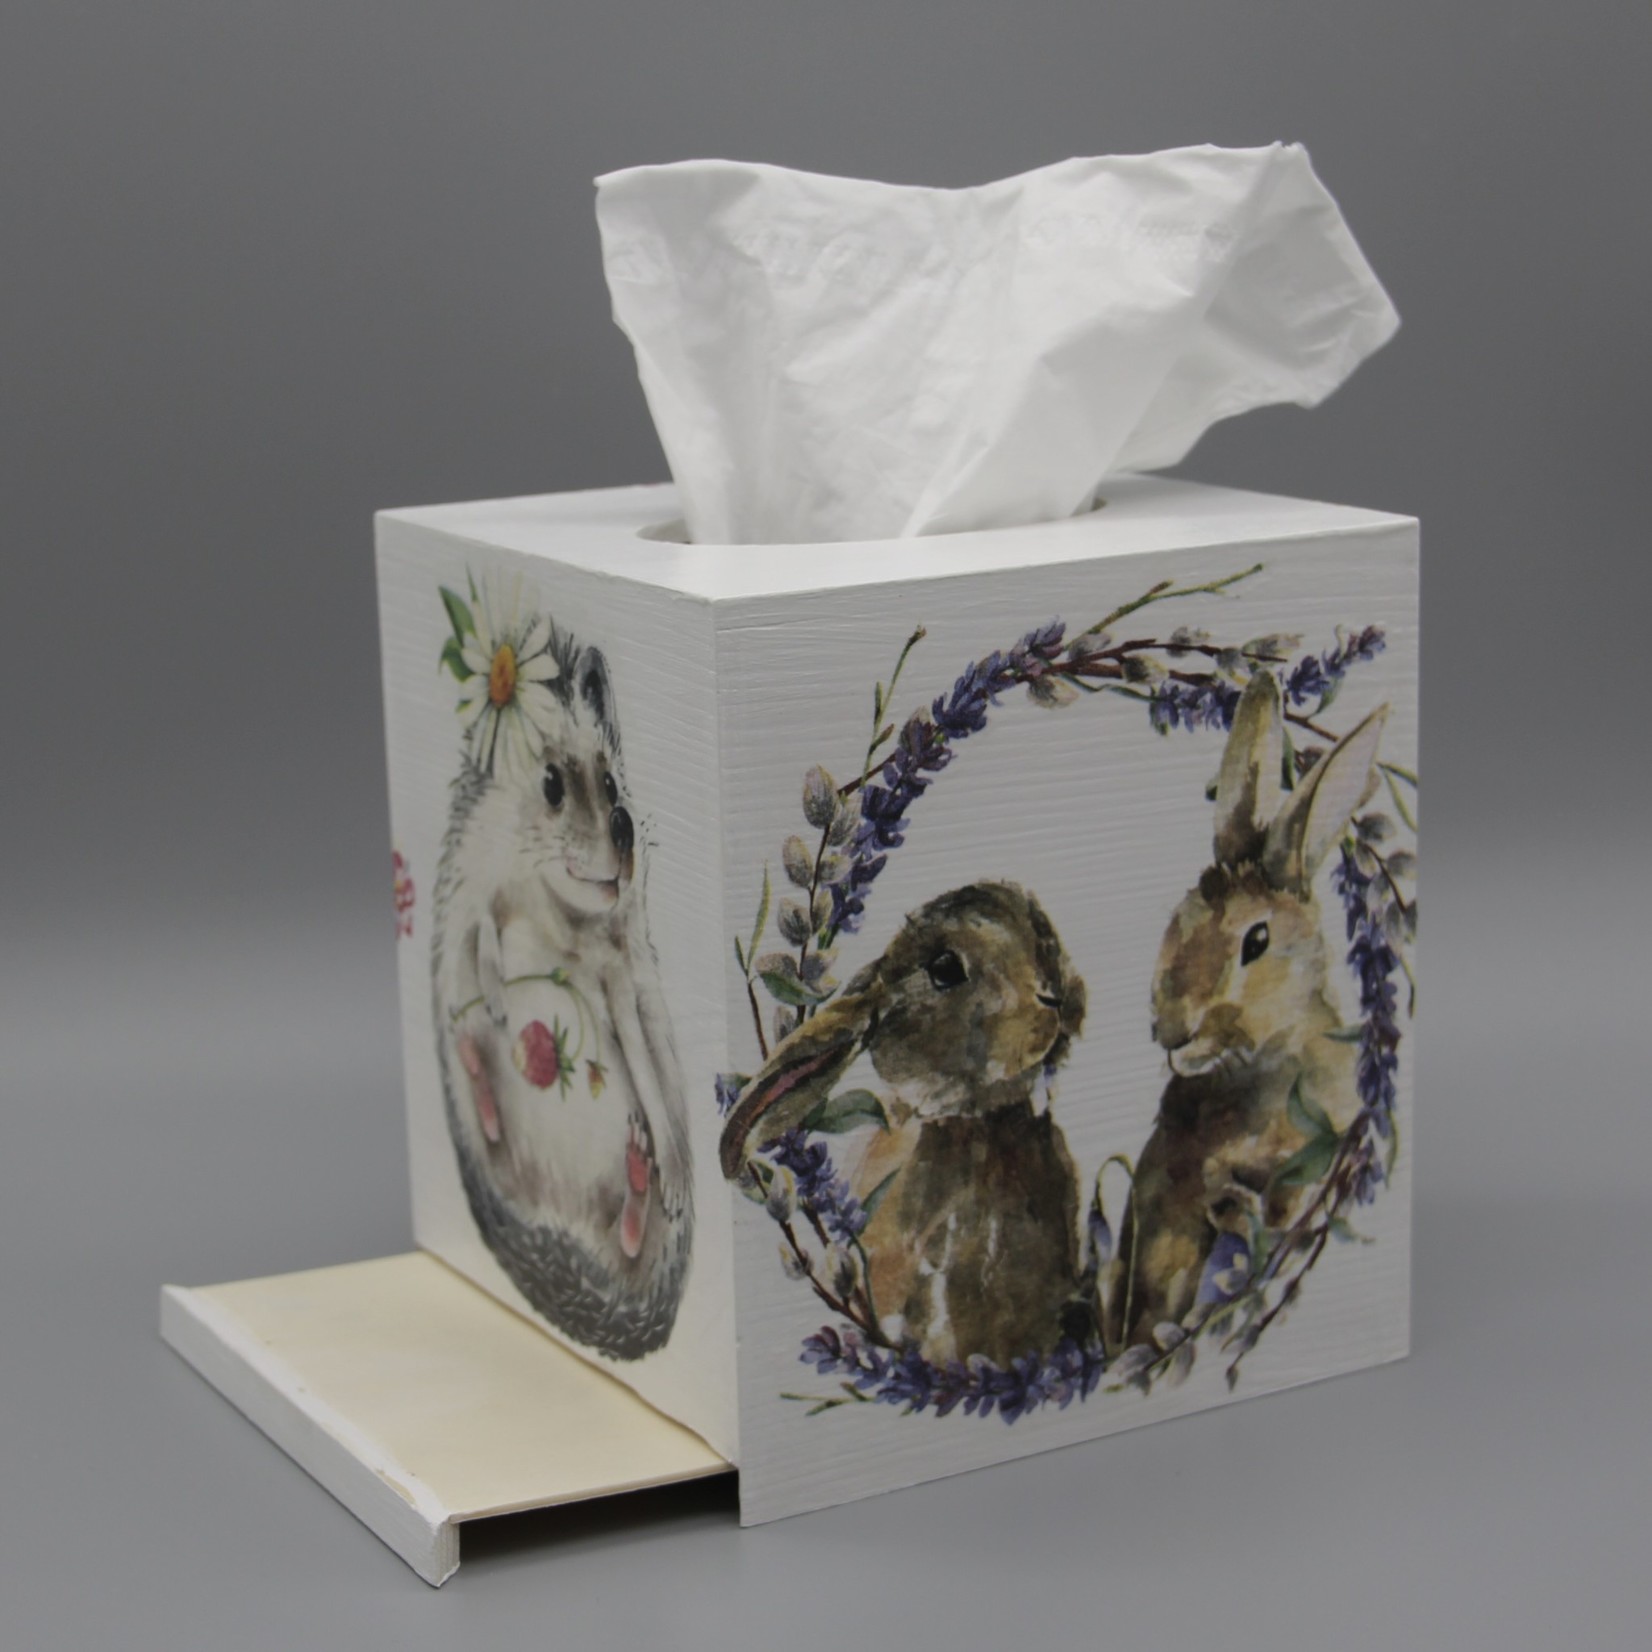 Animals Tissue Box Cover